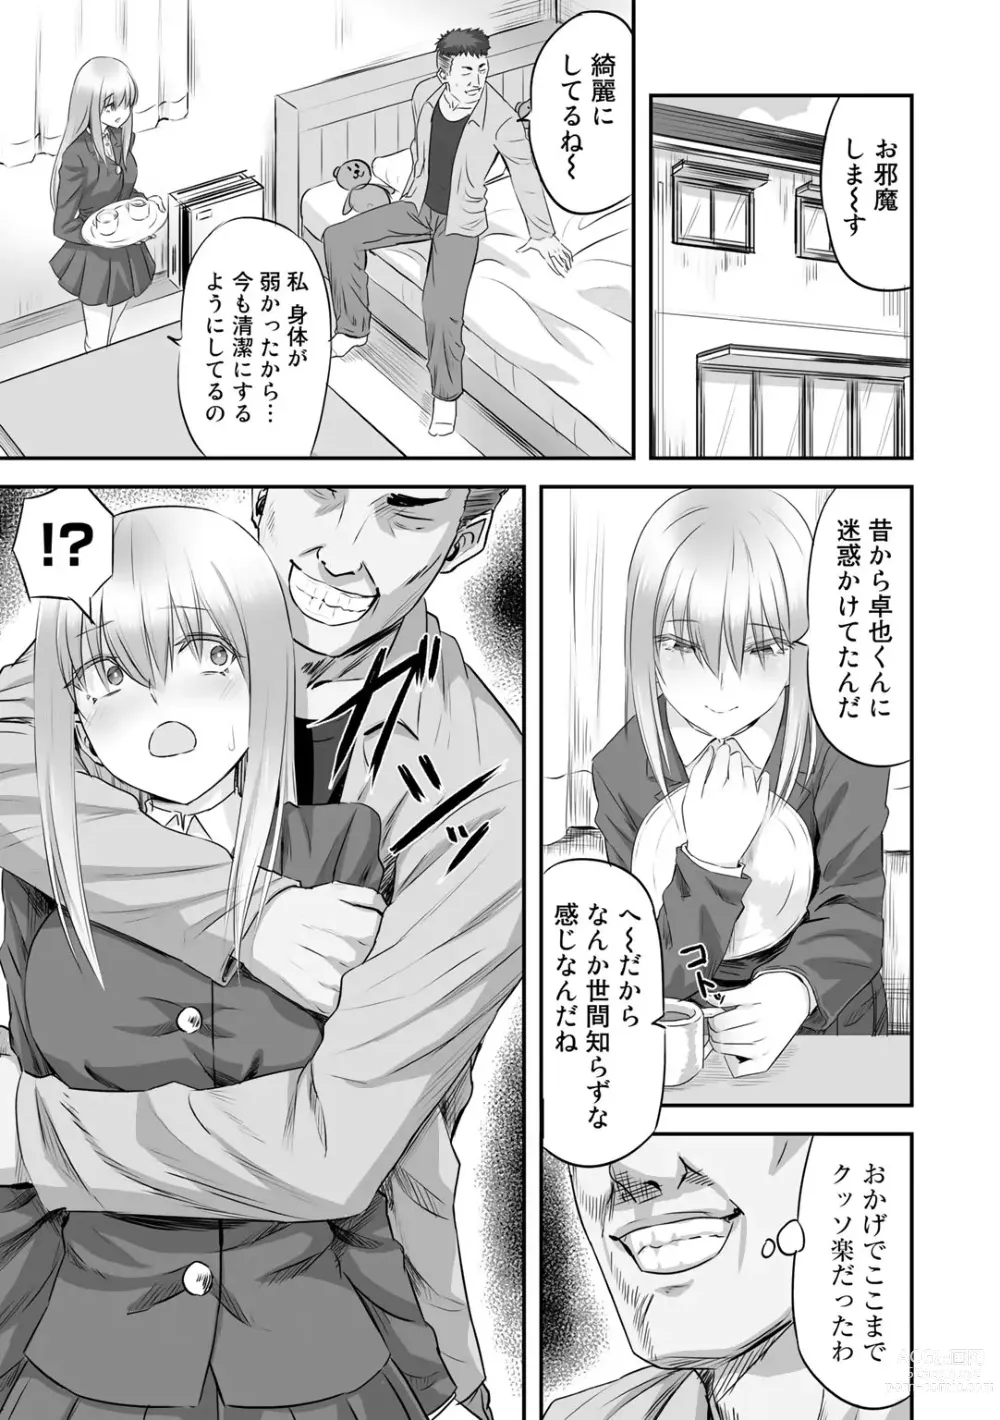 Page 9 of manga Netorare friends